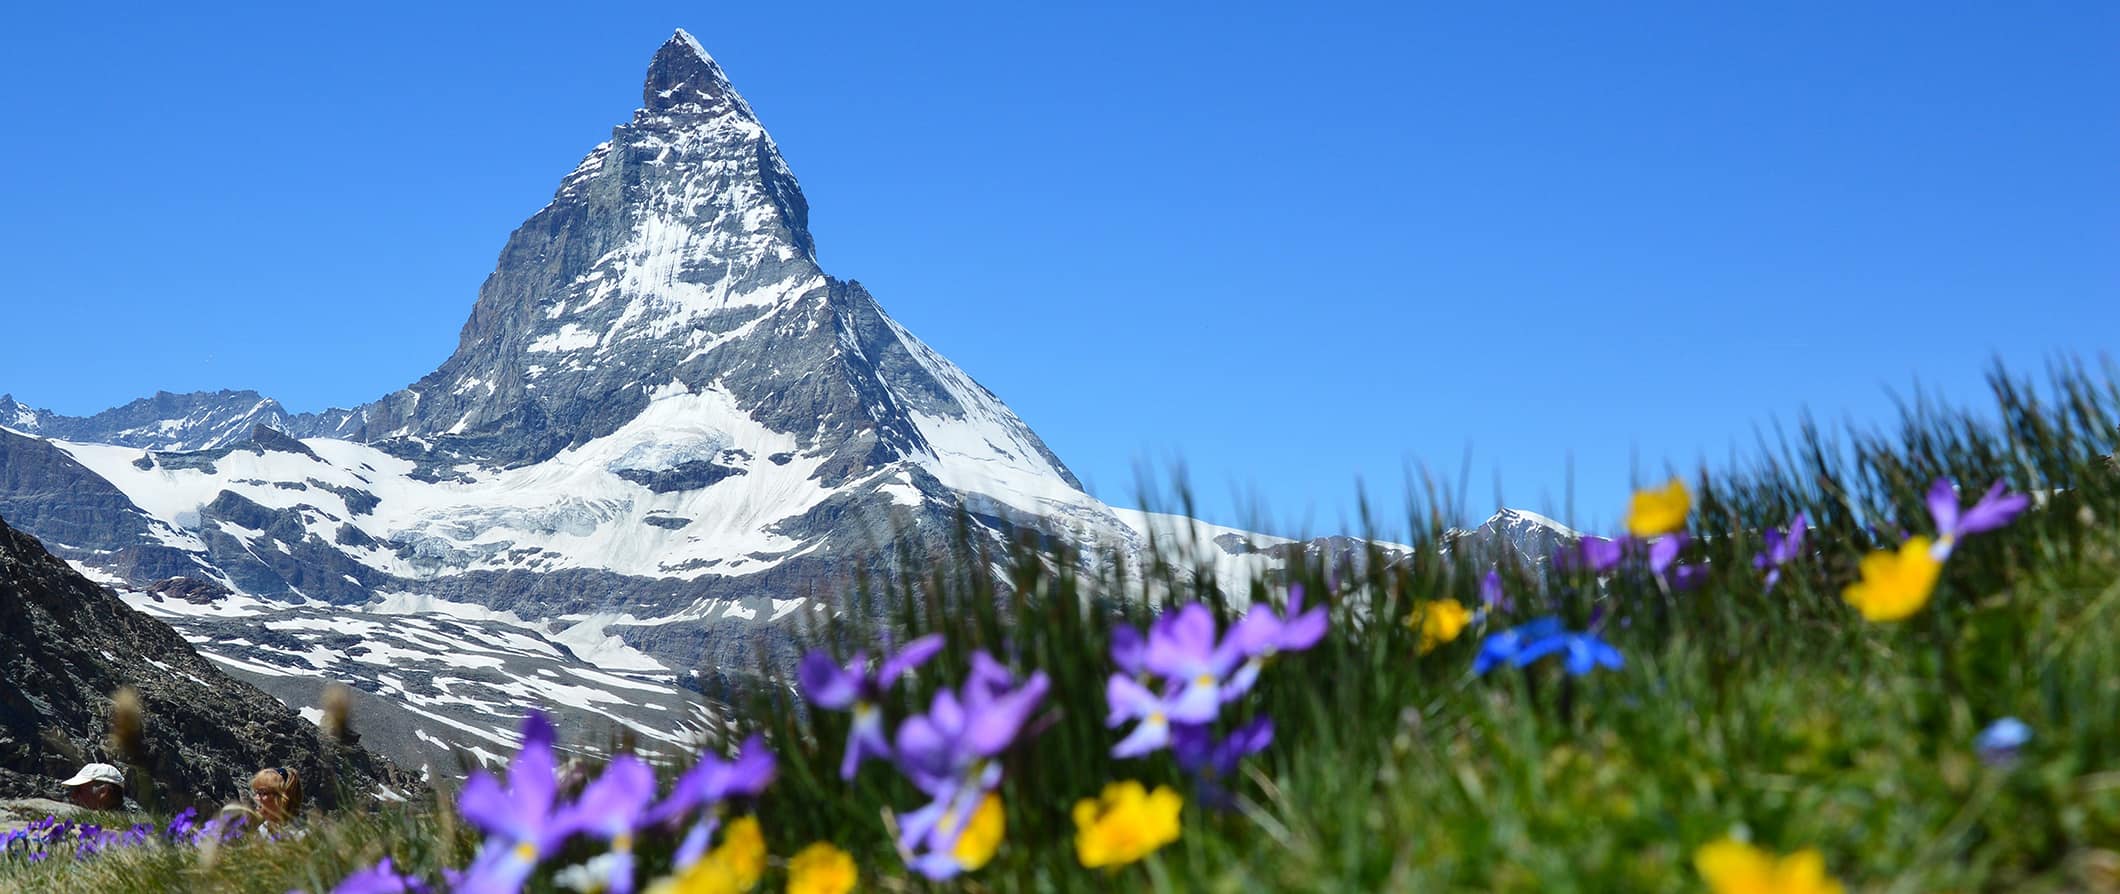 Matterhorn com flores roxas floridas, Suíça